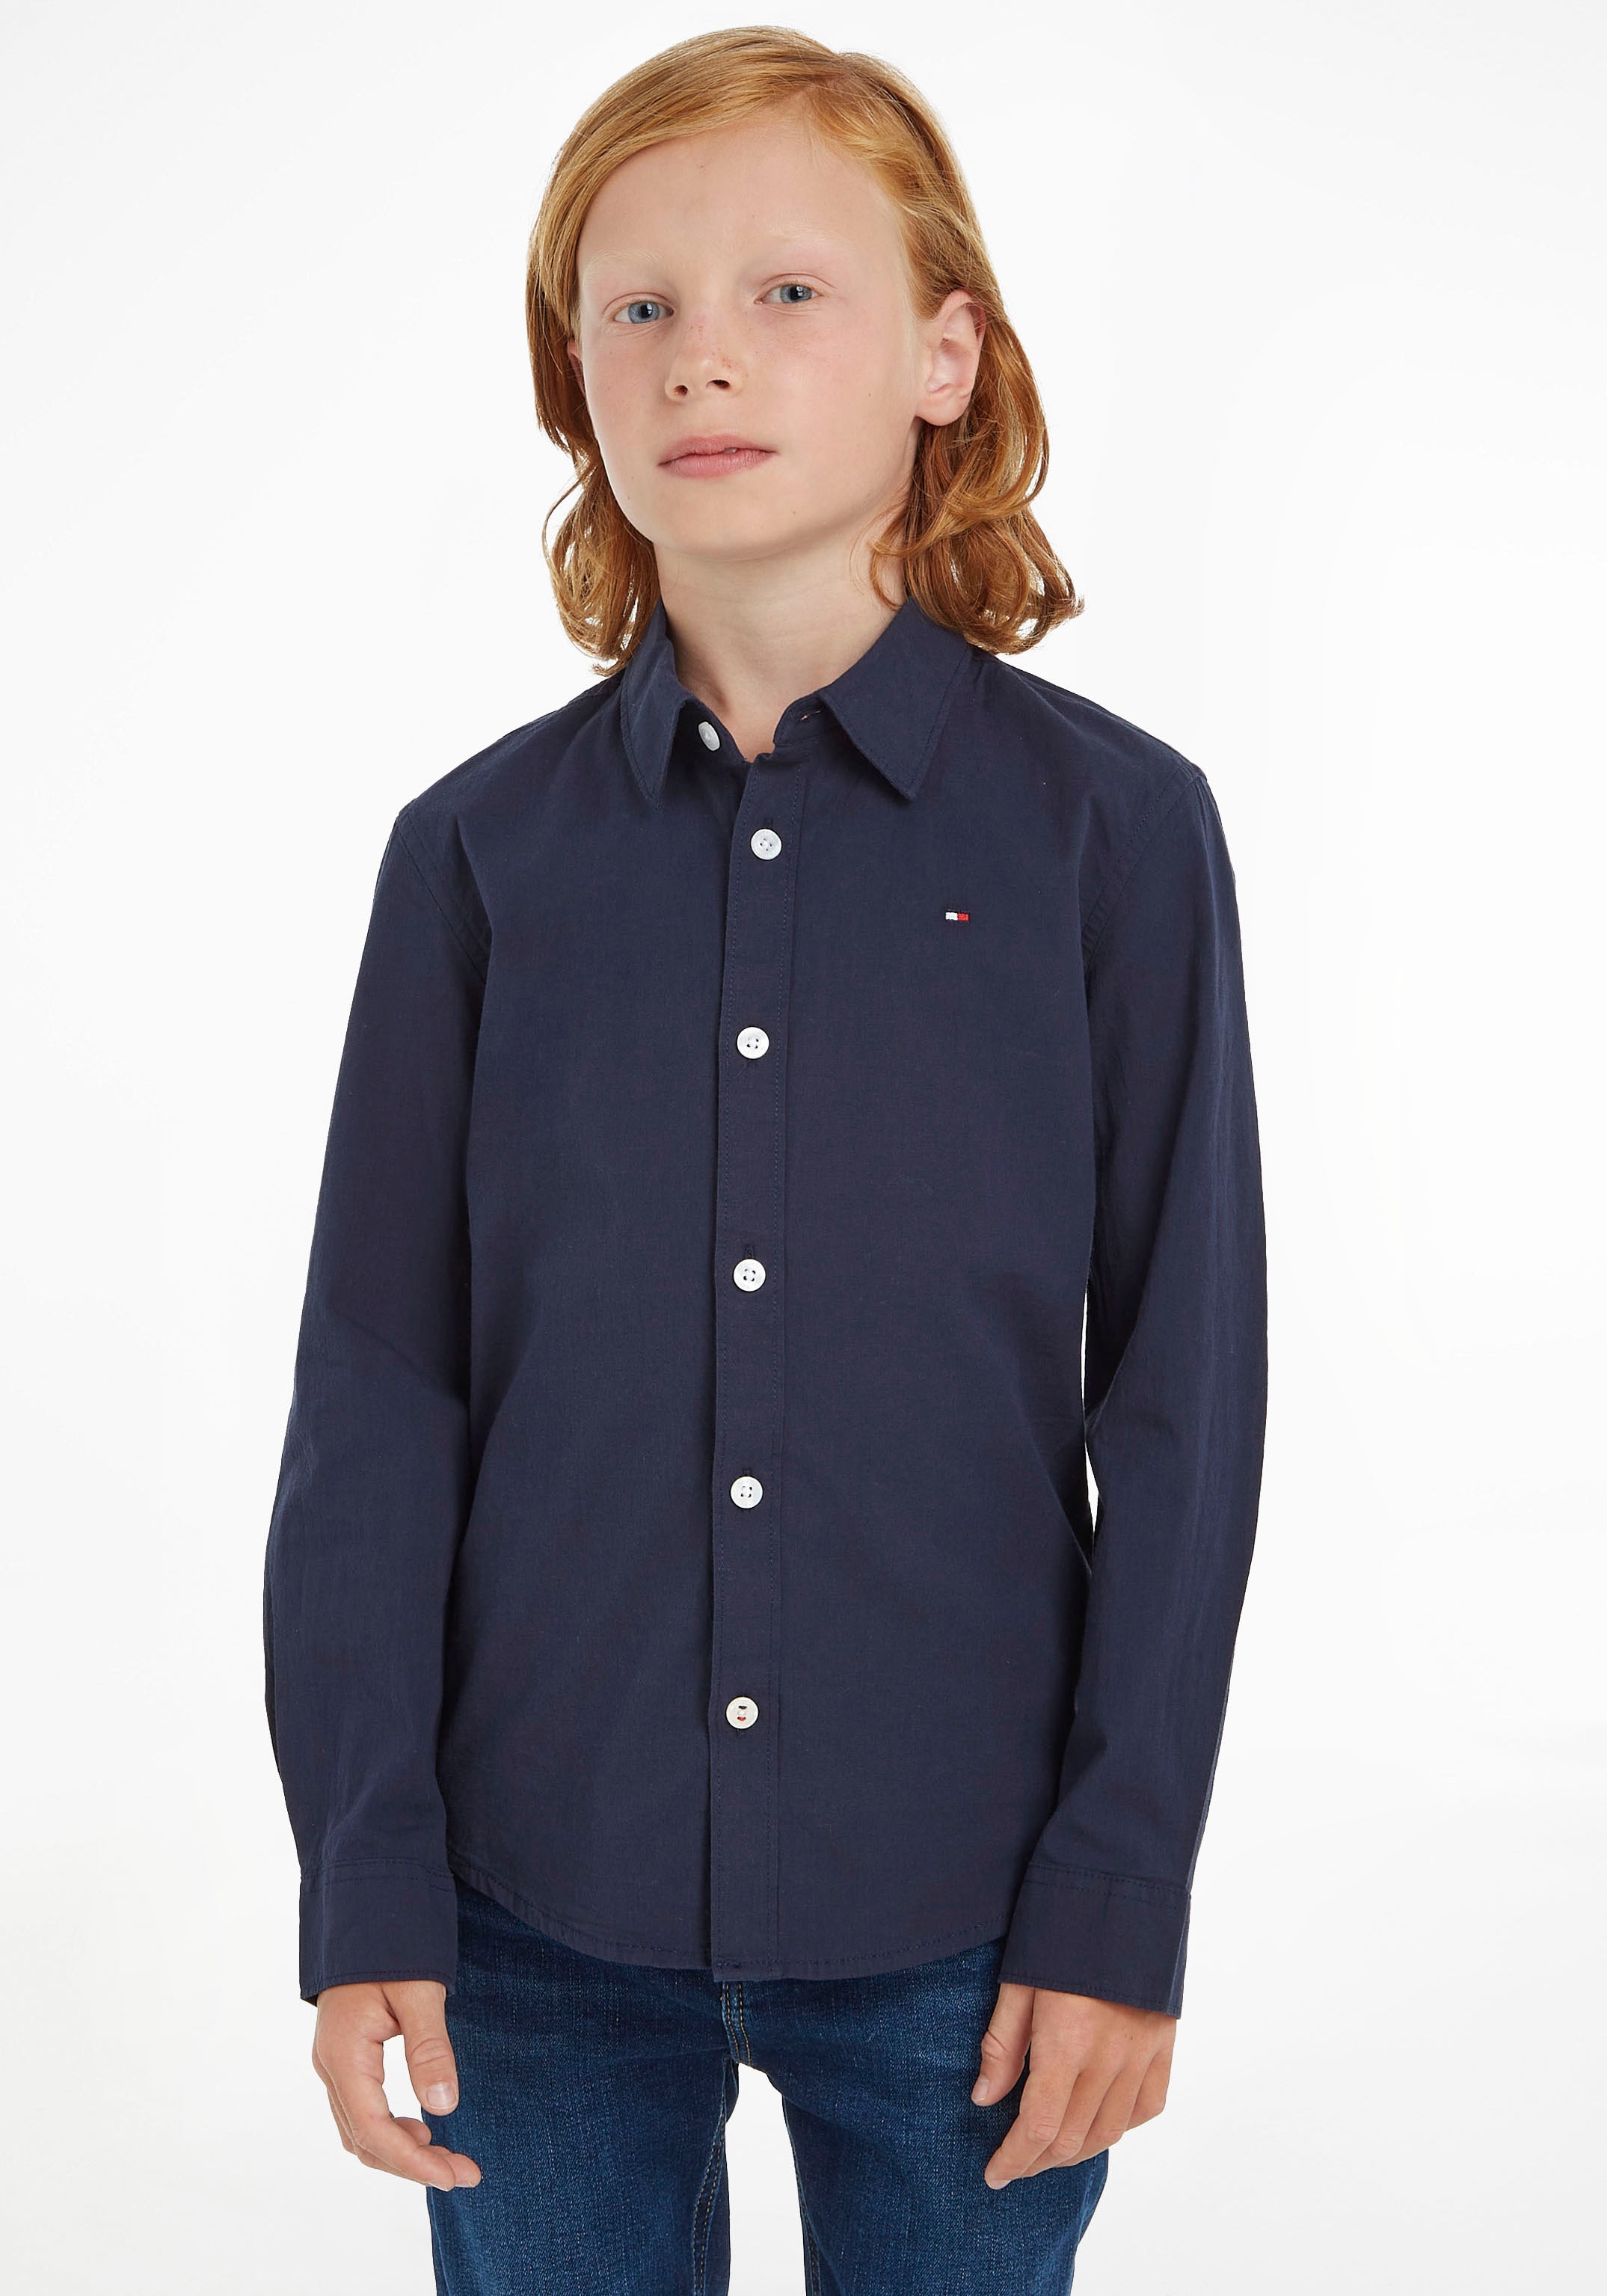 Hemden Online BAUR im Jungen bei Shop bestellen